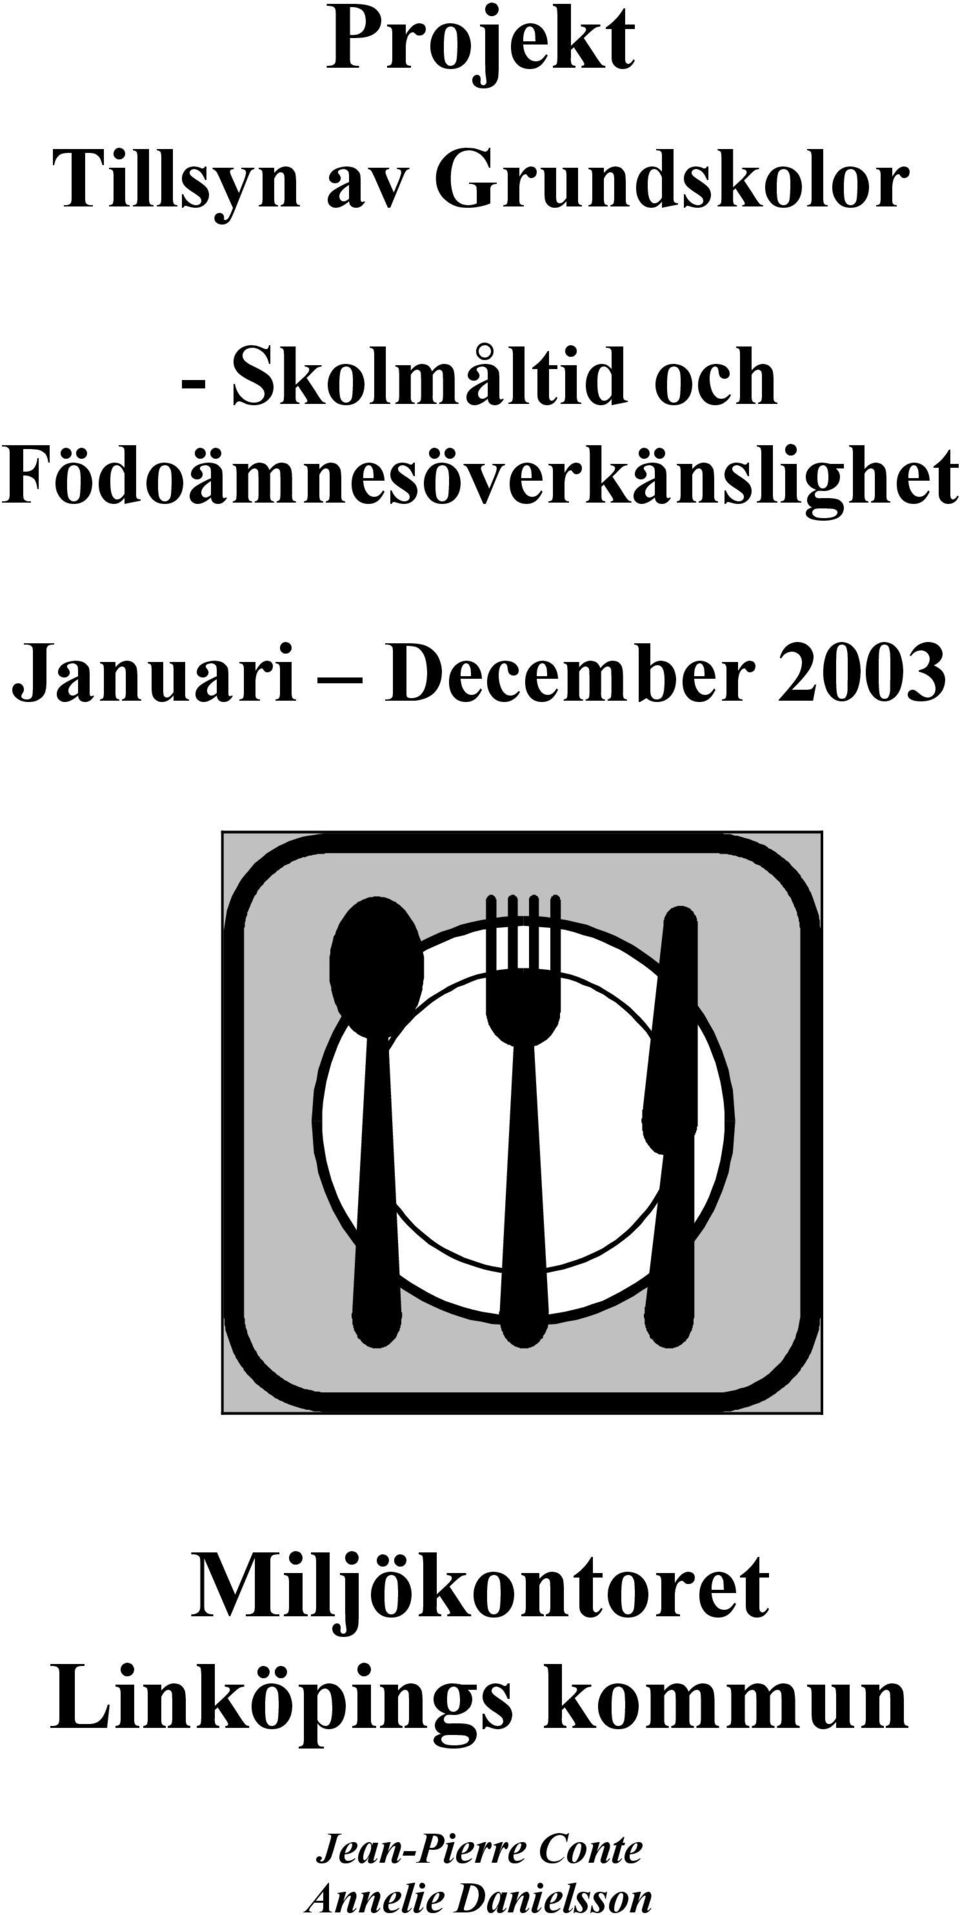 Januari December 2003 Miljökontoret